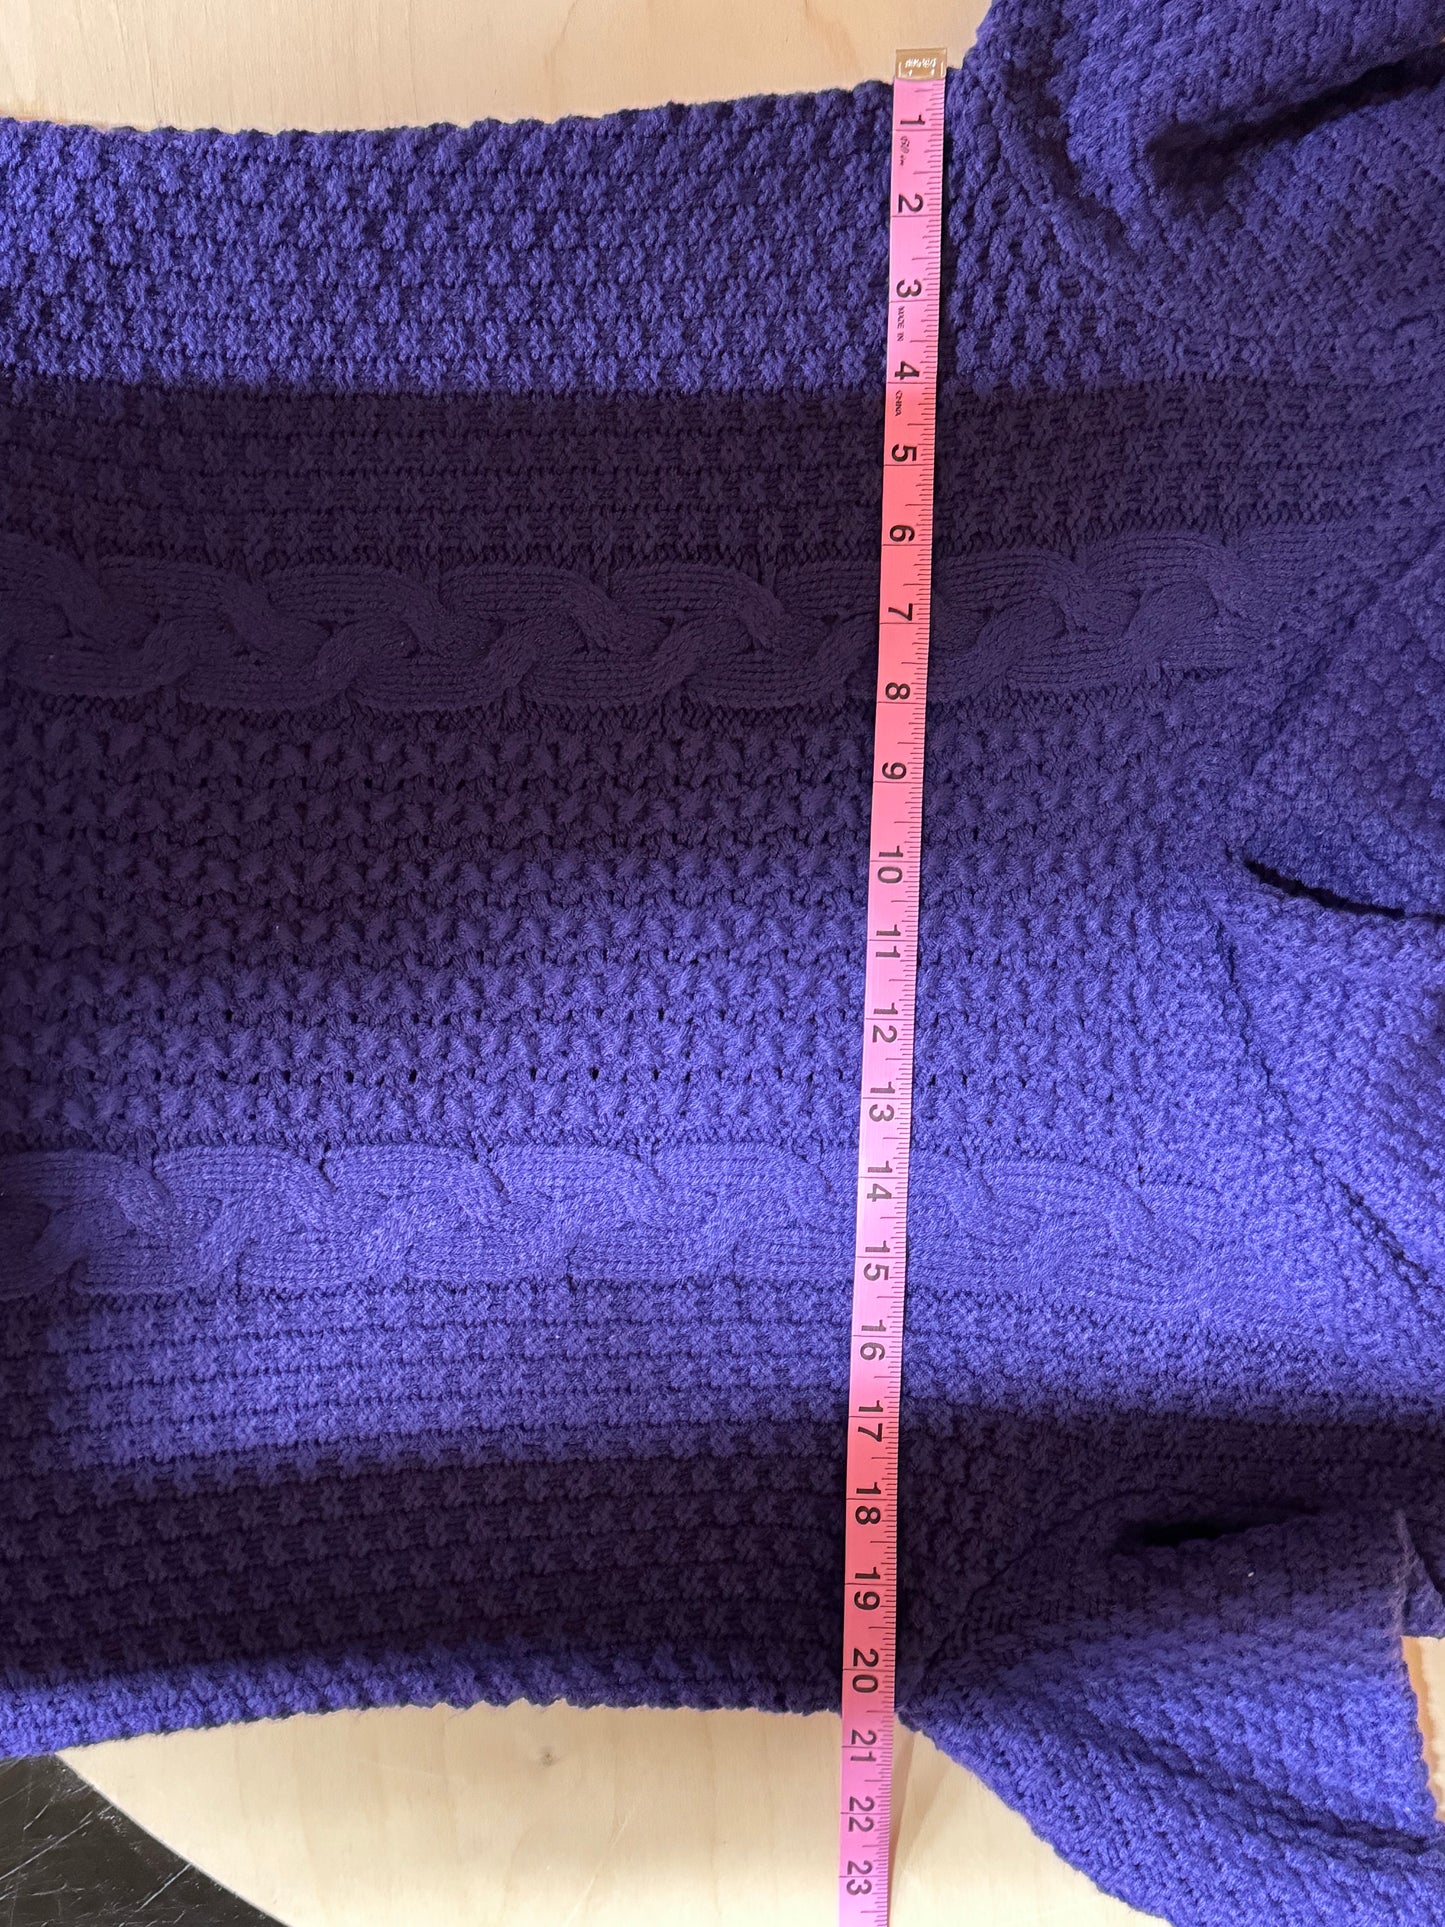 Vintage Chico’s Turtle Neck Women’s Knit Mock Neck Sweater Purple - Size 2